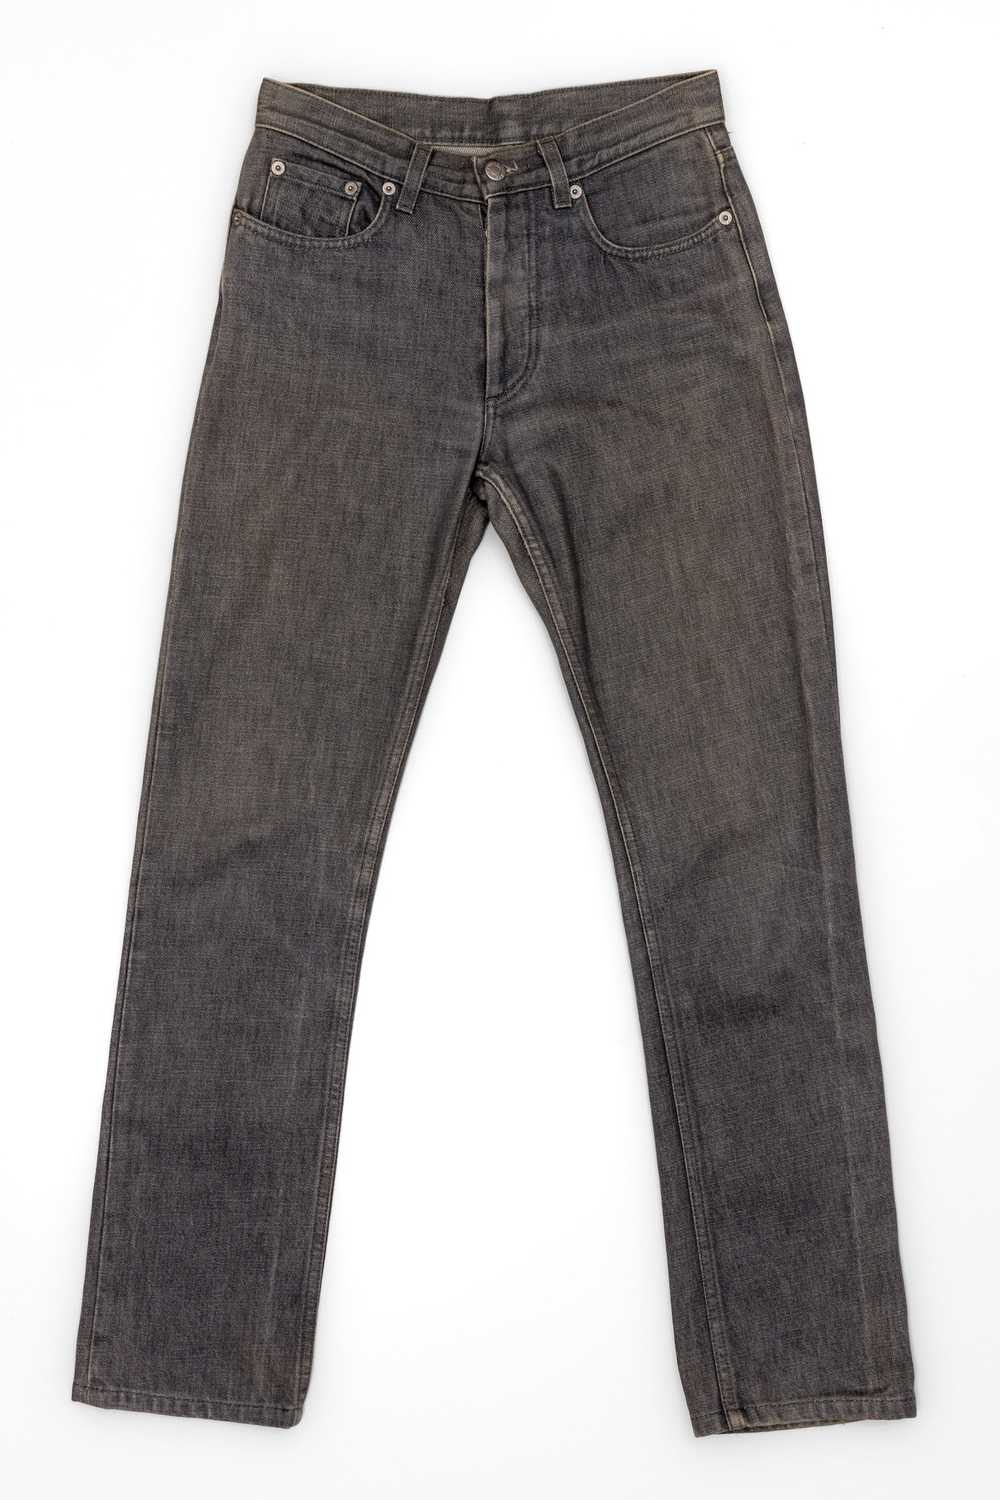 Helmut Lang Grey Classic Raw Denim Jeans - image 2